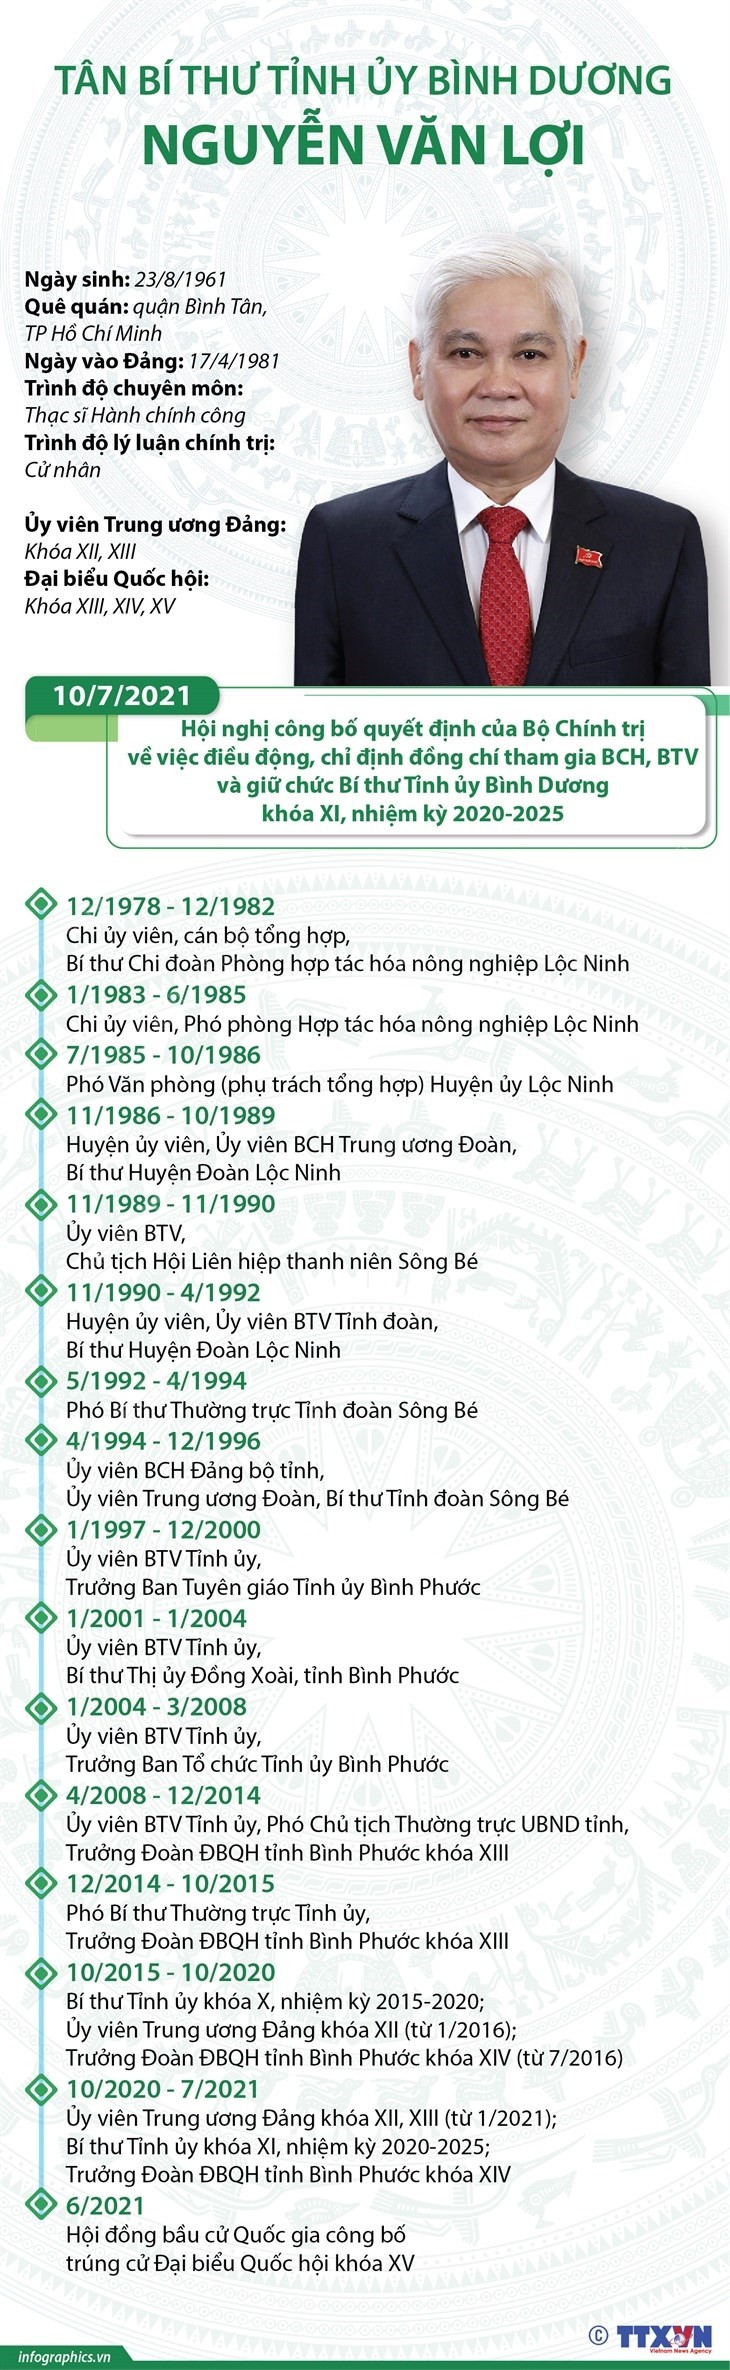 [Infographics] Tan Bi thu Tinh uy Binh Duong Nguyen Van Loi hinh anh 1